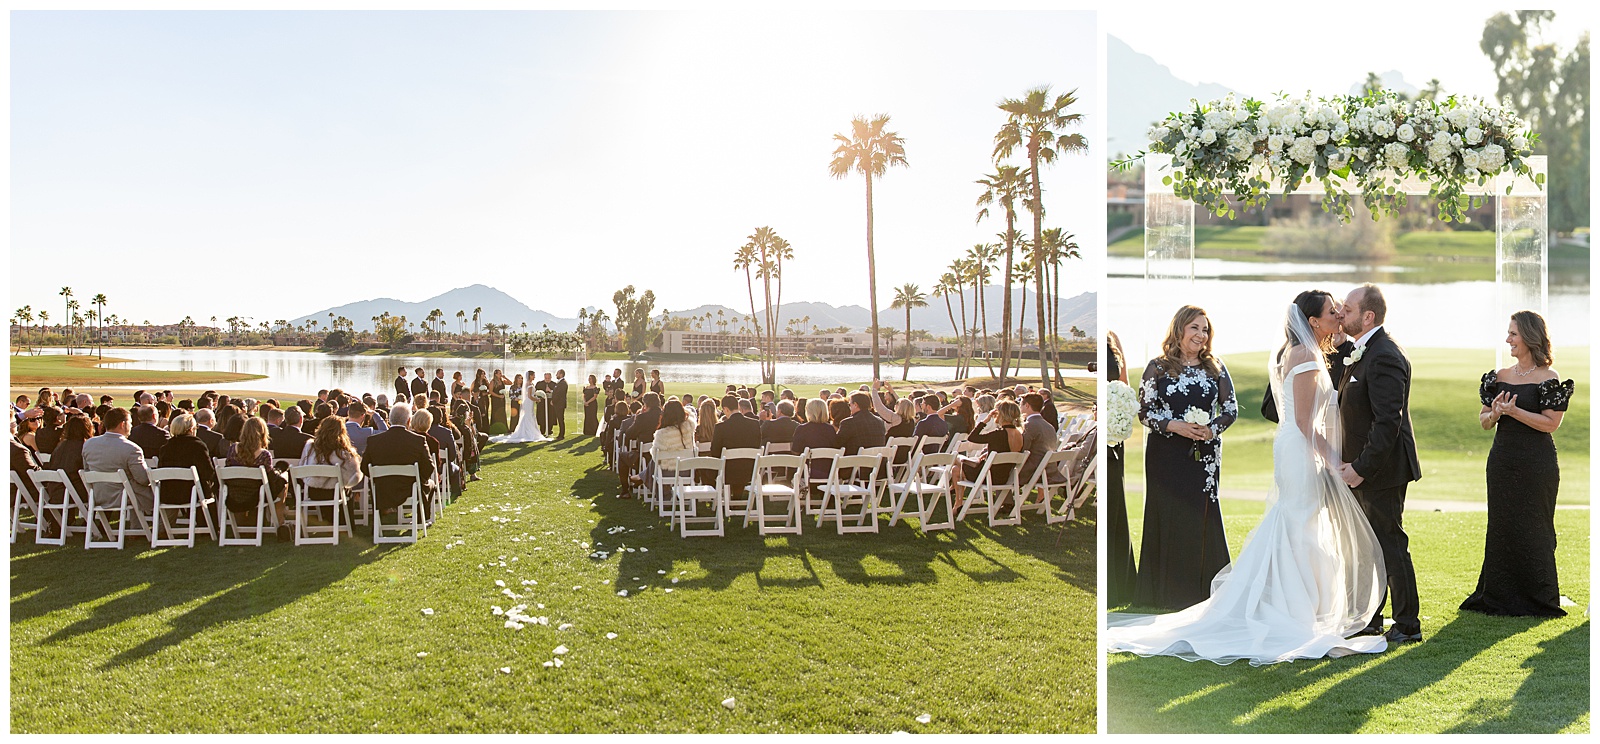 Wedding Ceremony at McCormick Ranch Golf Club, Scottsdale AZ